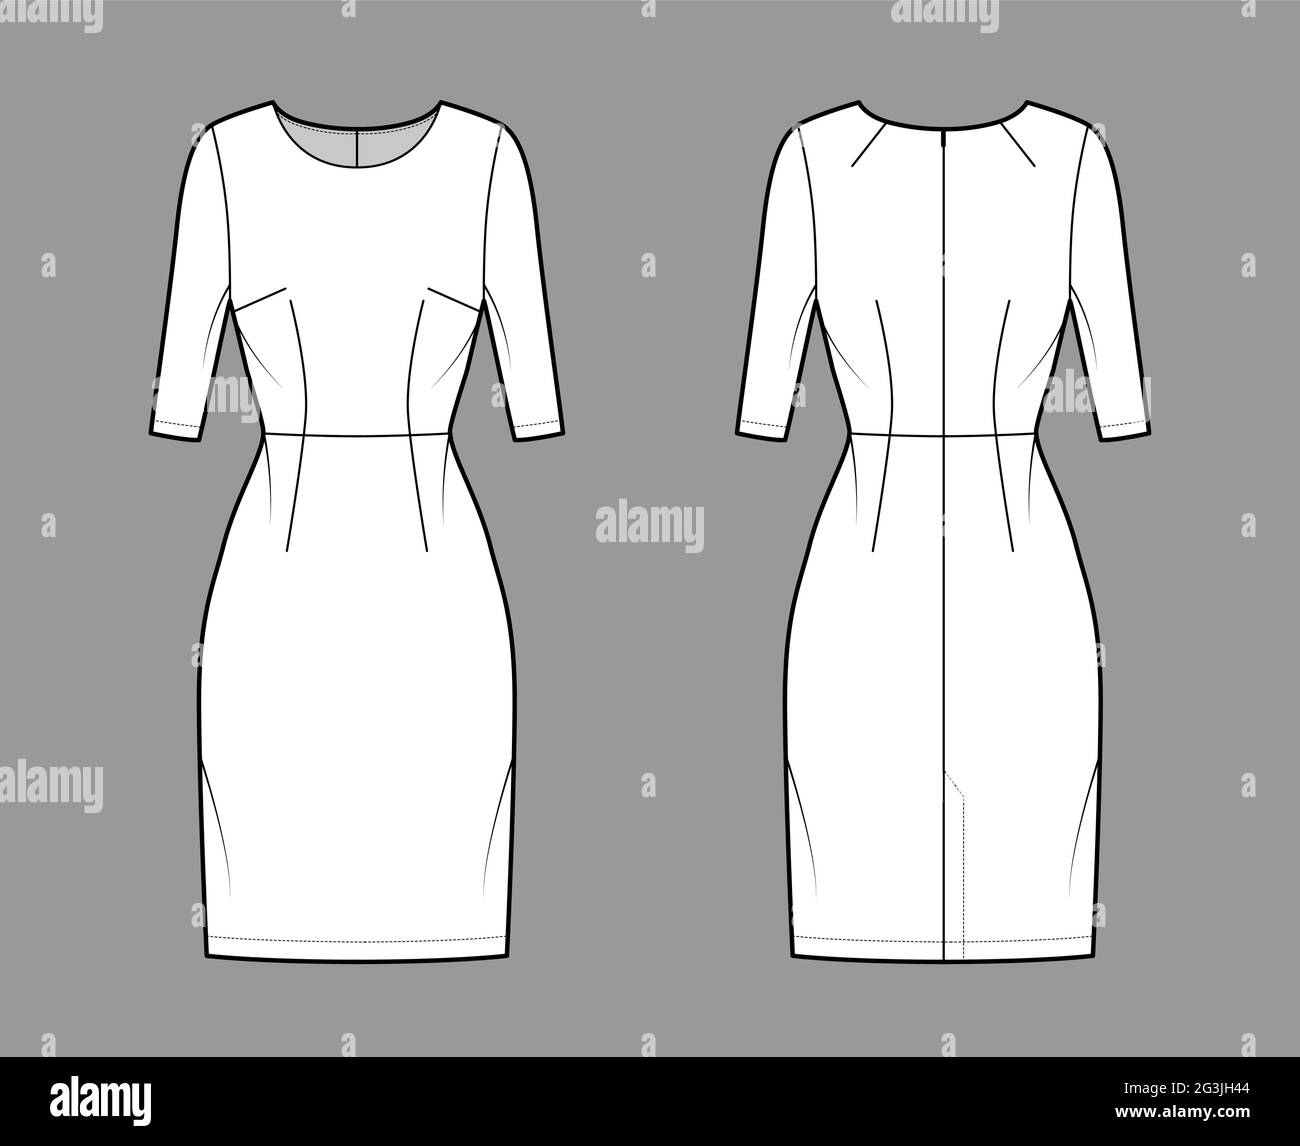 Flat Fashion Technical Sketch  Woman Sheath Dress Stock Illustration   Illustration of fashion casual 78375581